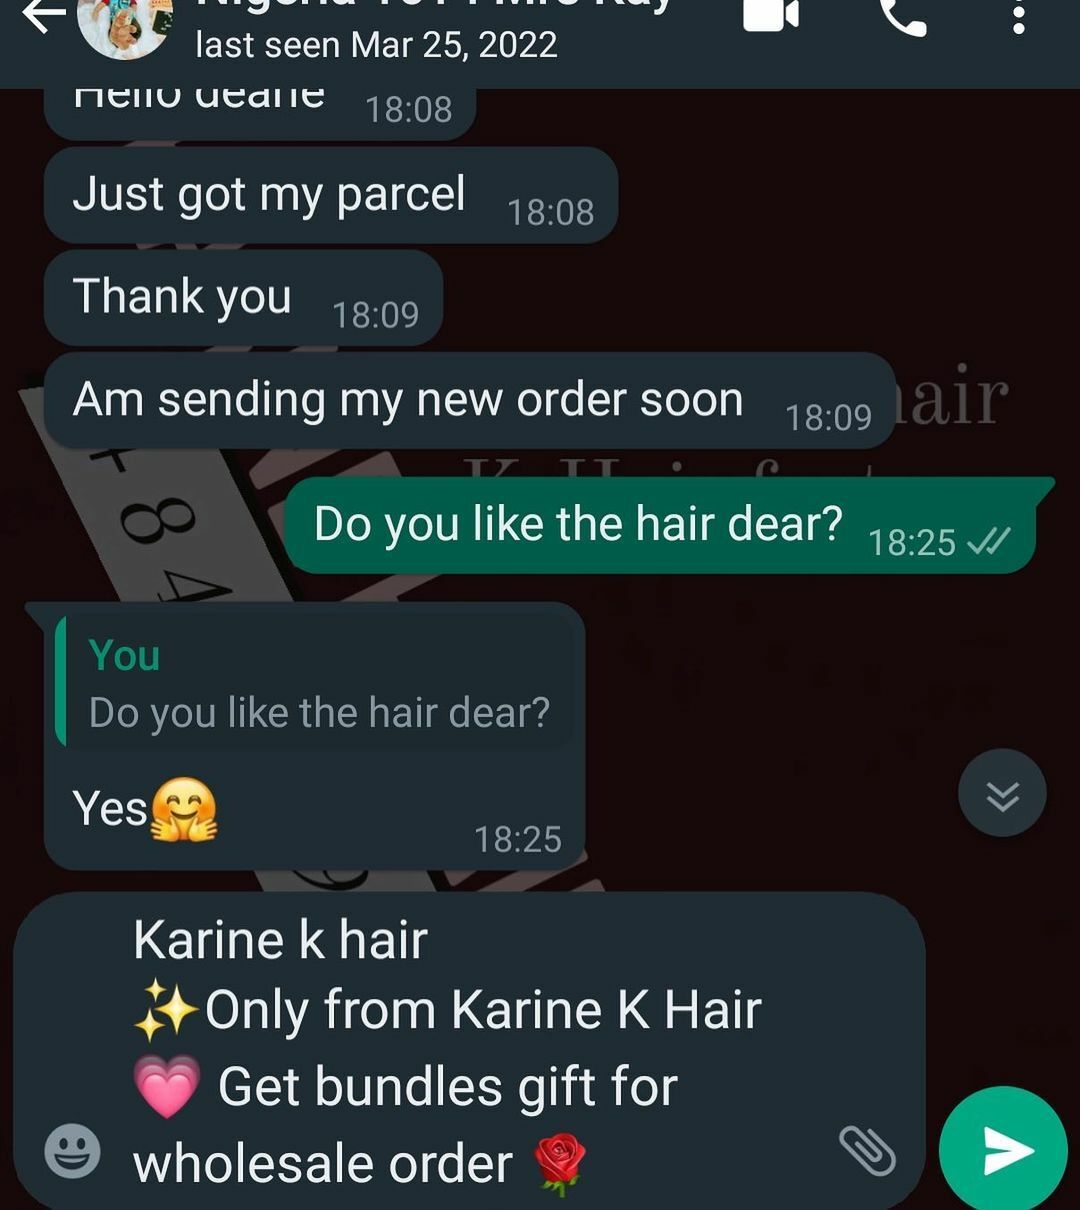 Customer love K-Hair's products